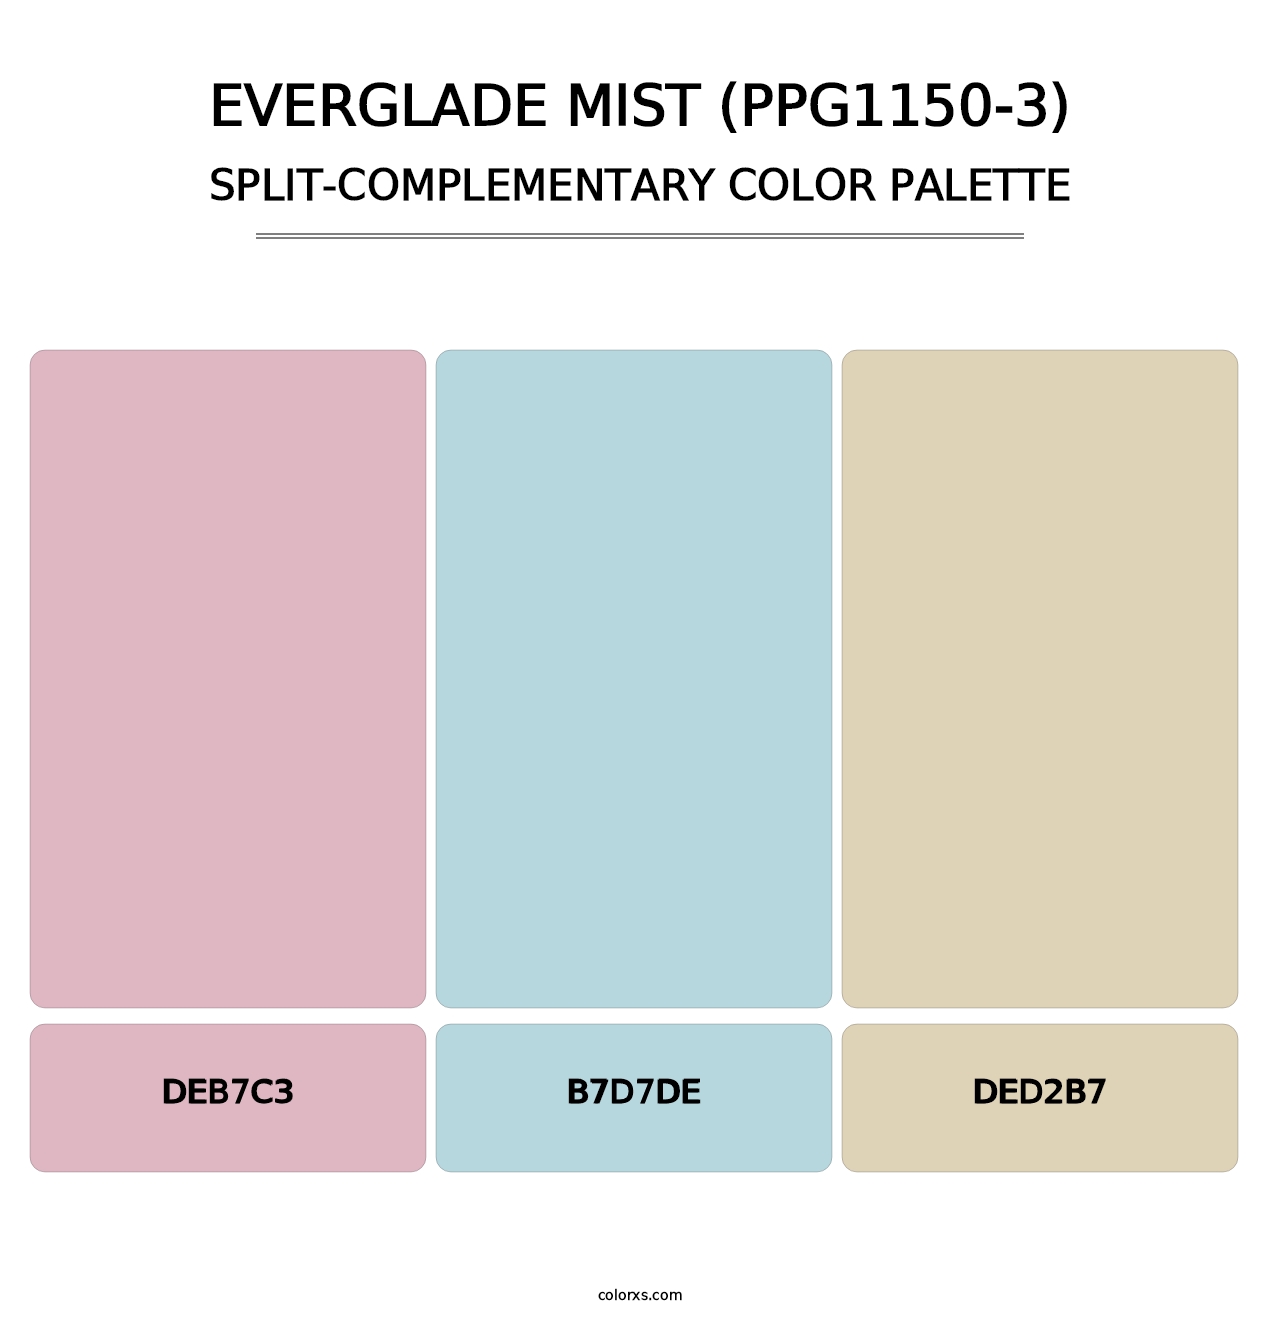 Everglade Mist (PPG1150-3) - Split-Complementary Color Palette